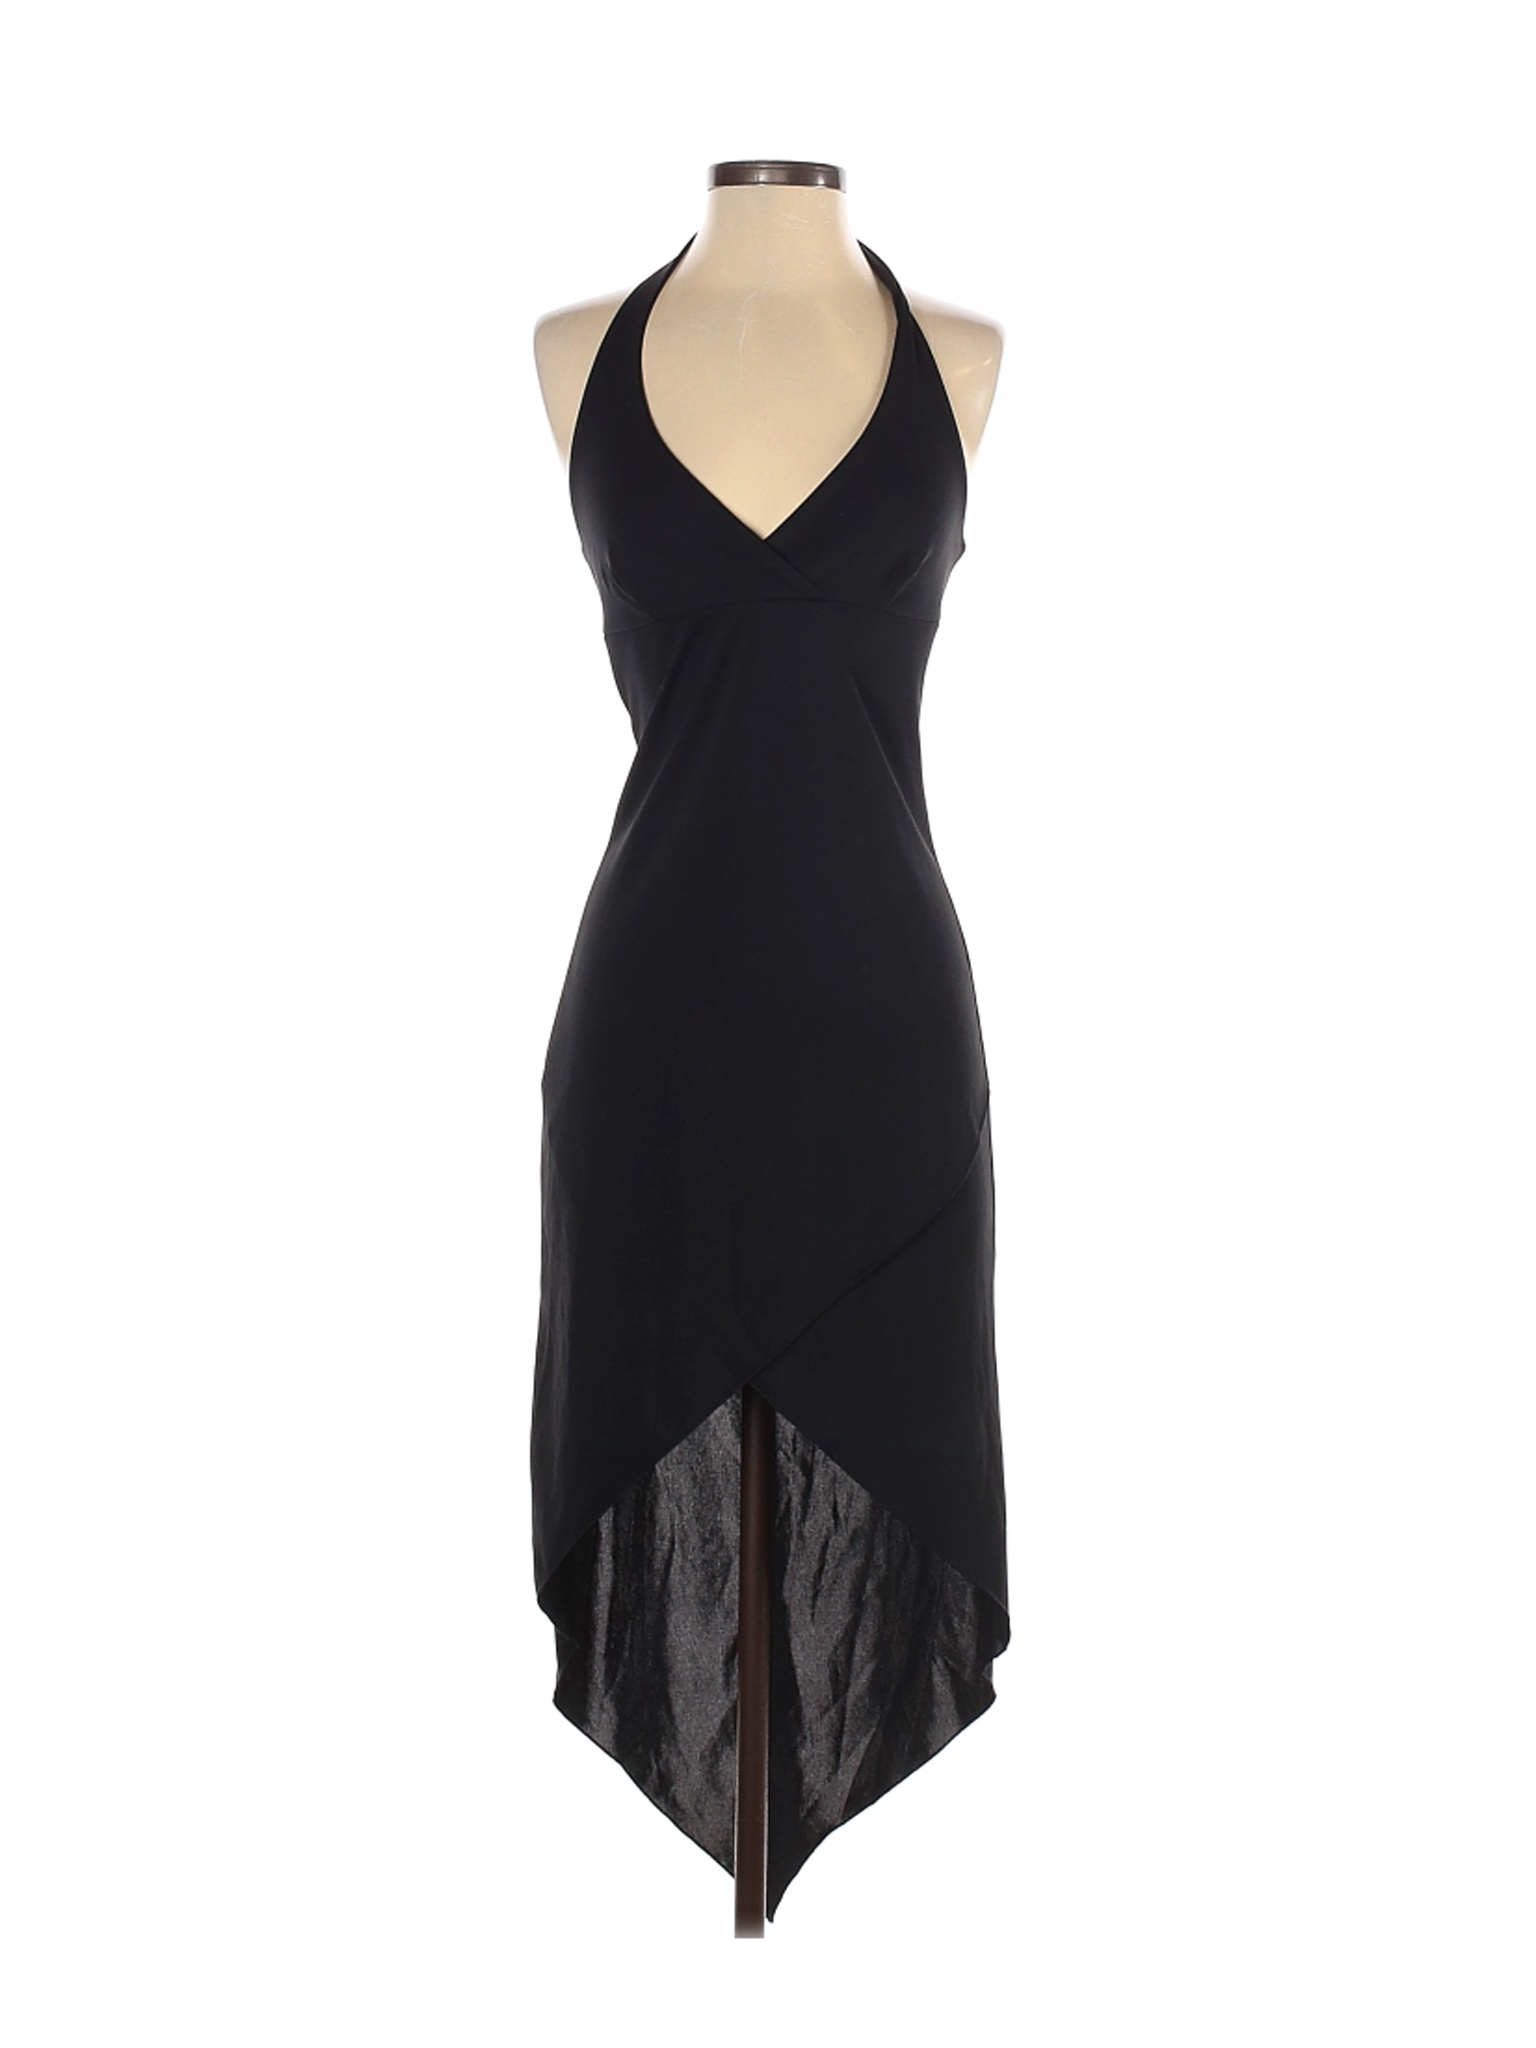 Hourglass Women Black Cocktail Dress S | eBay